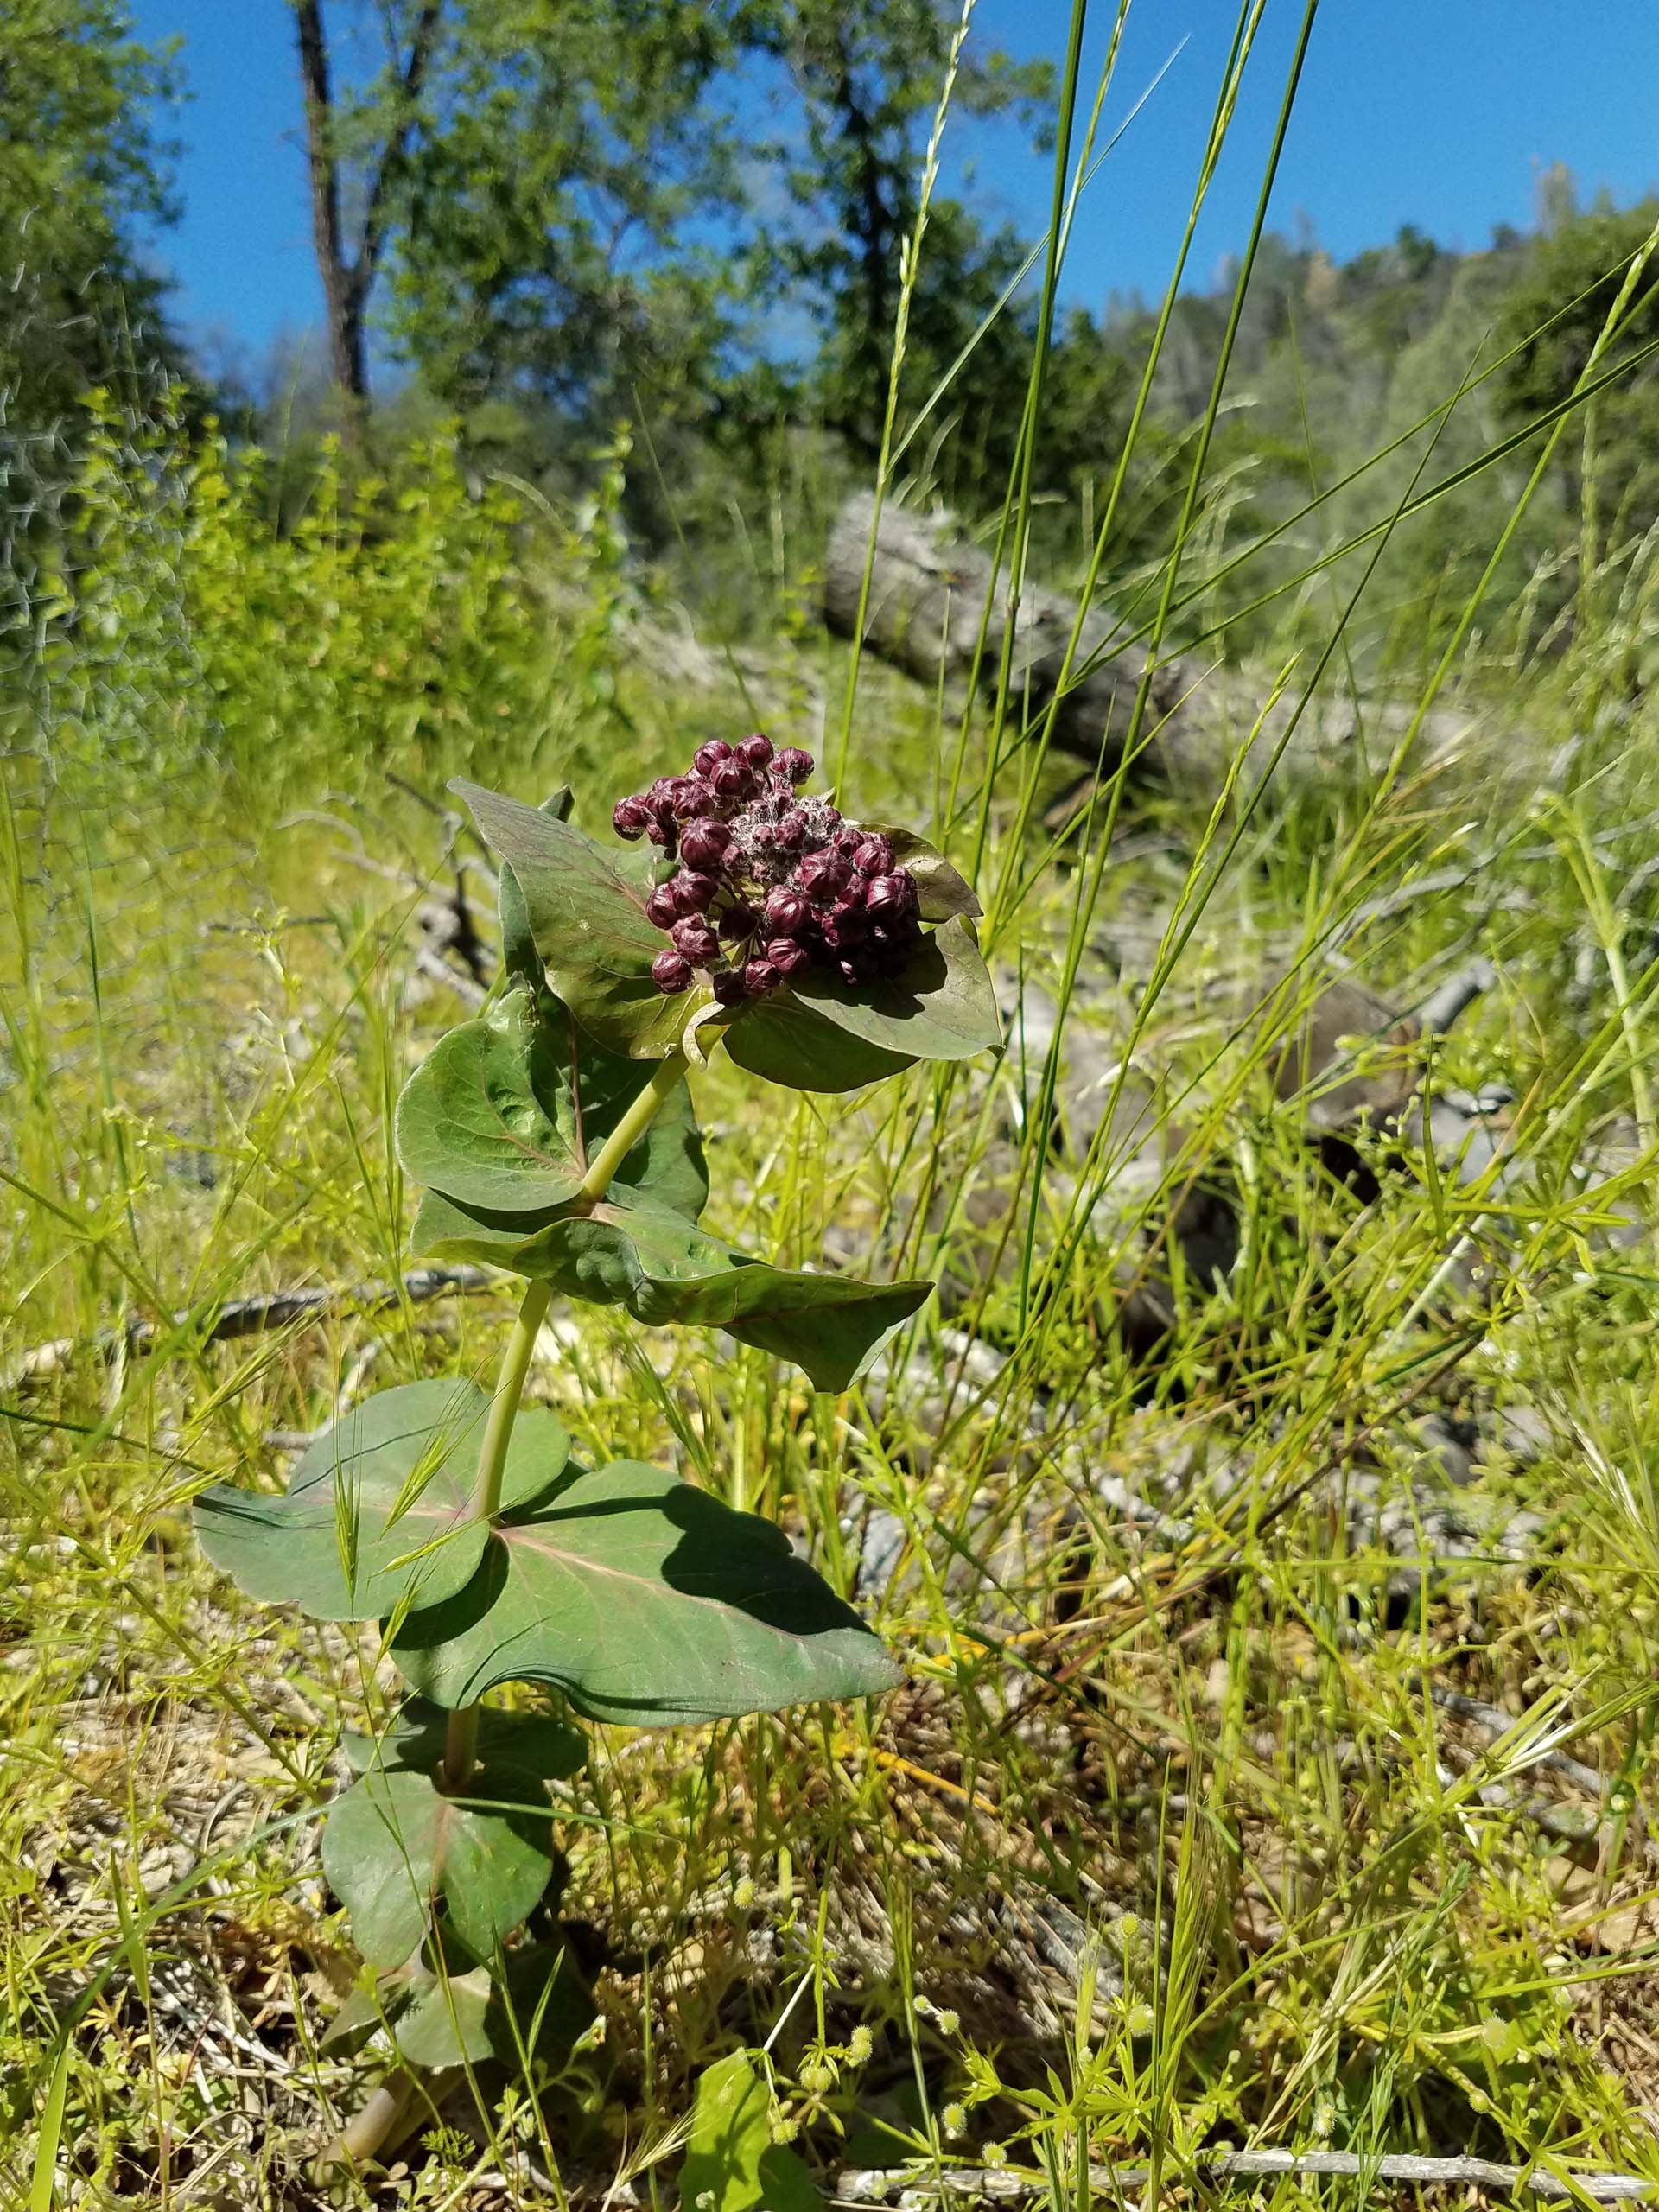 Heart leaf or purple milkweed. D. Mandel.